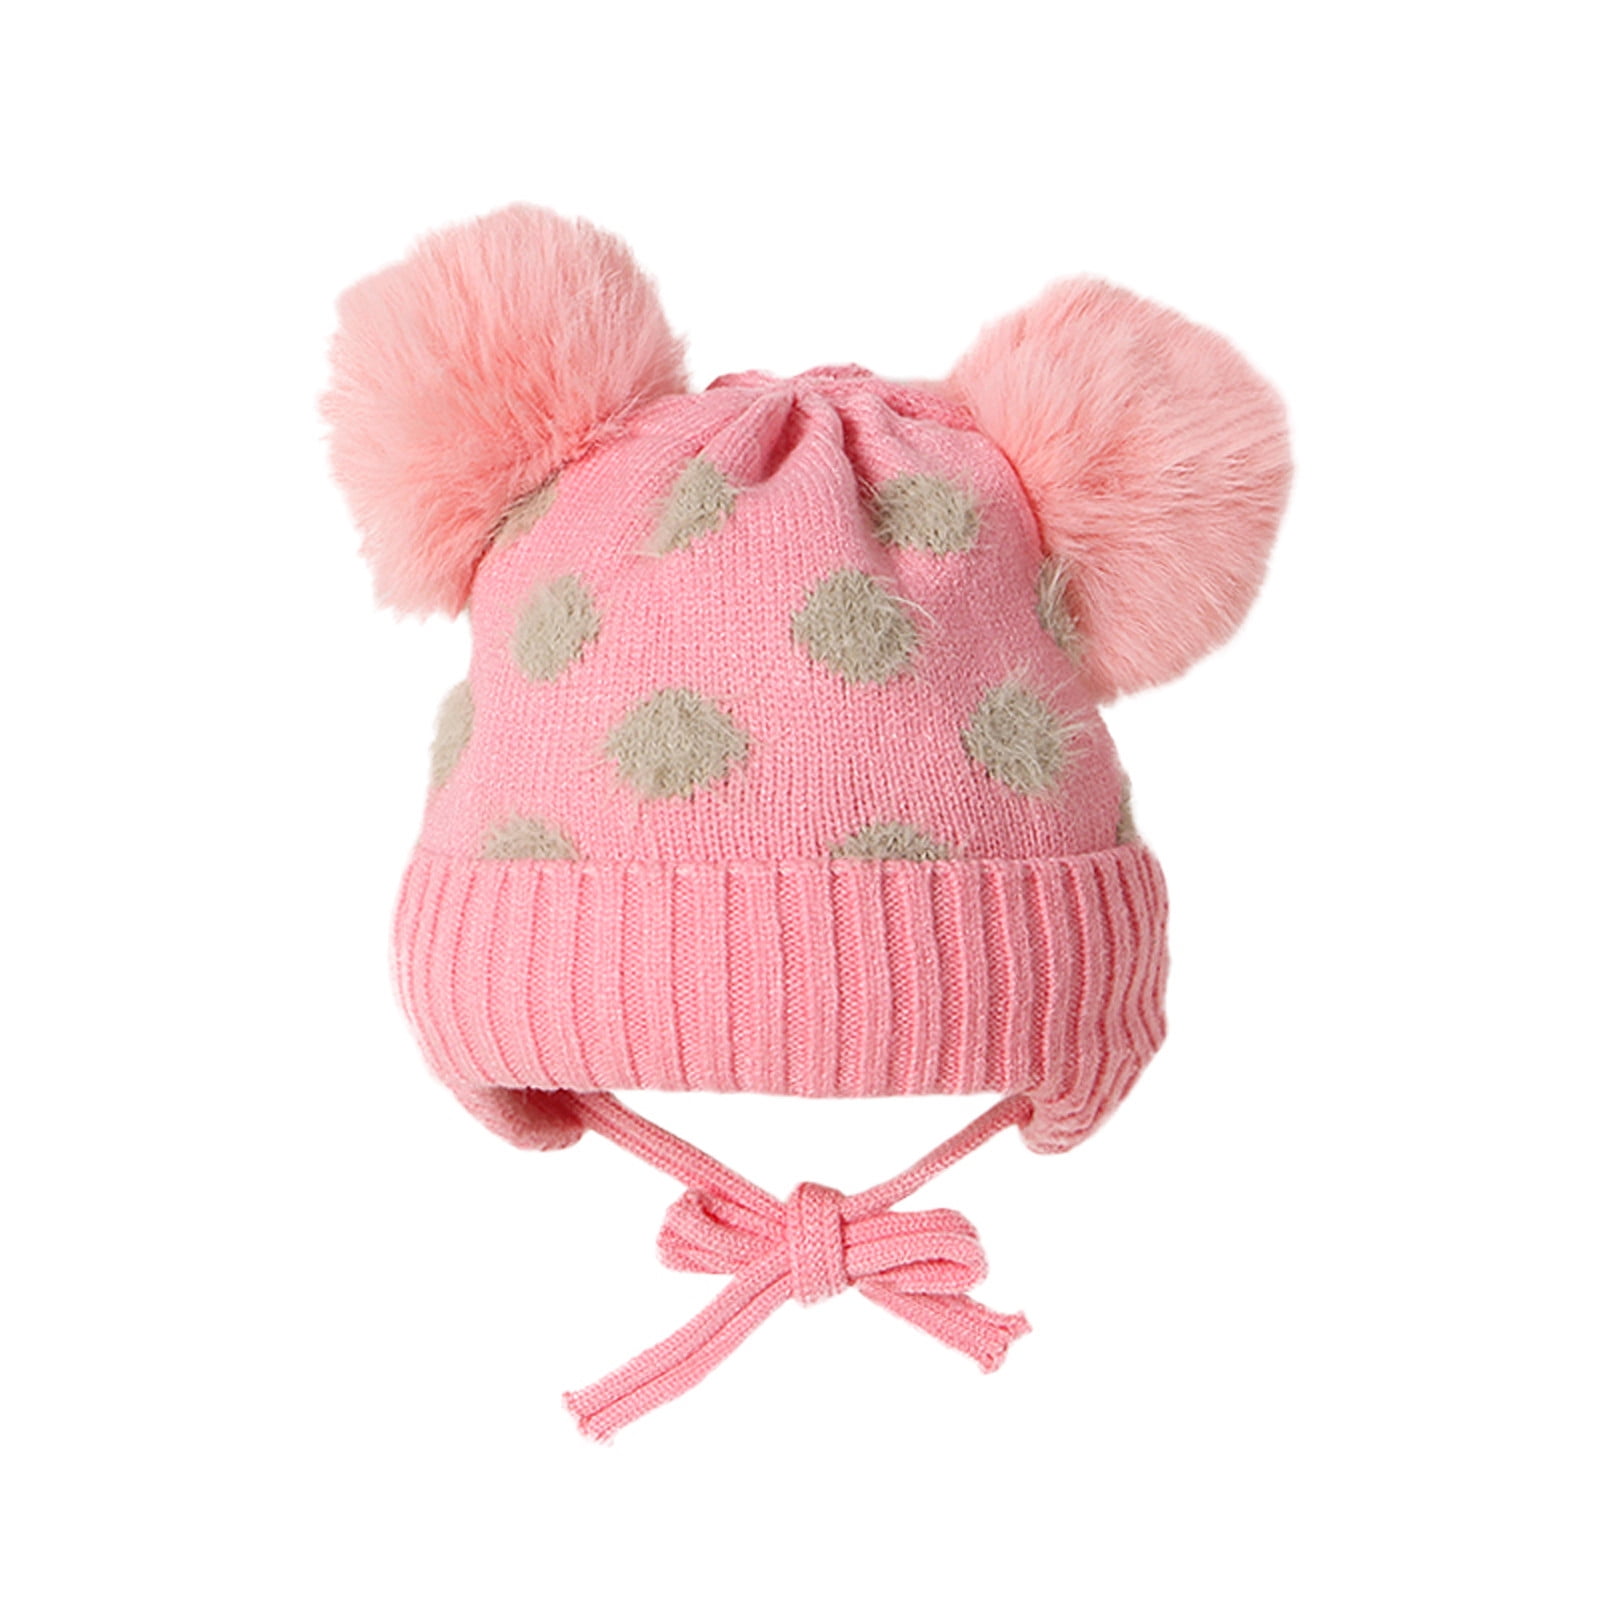 Baby Girls Kids Black Cute Warm Winter Autumn Thermal Hello Kitty Beanie Hat Cap 